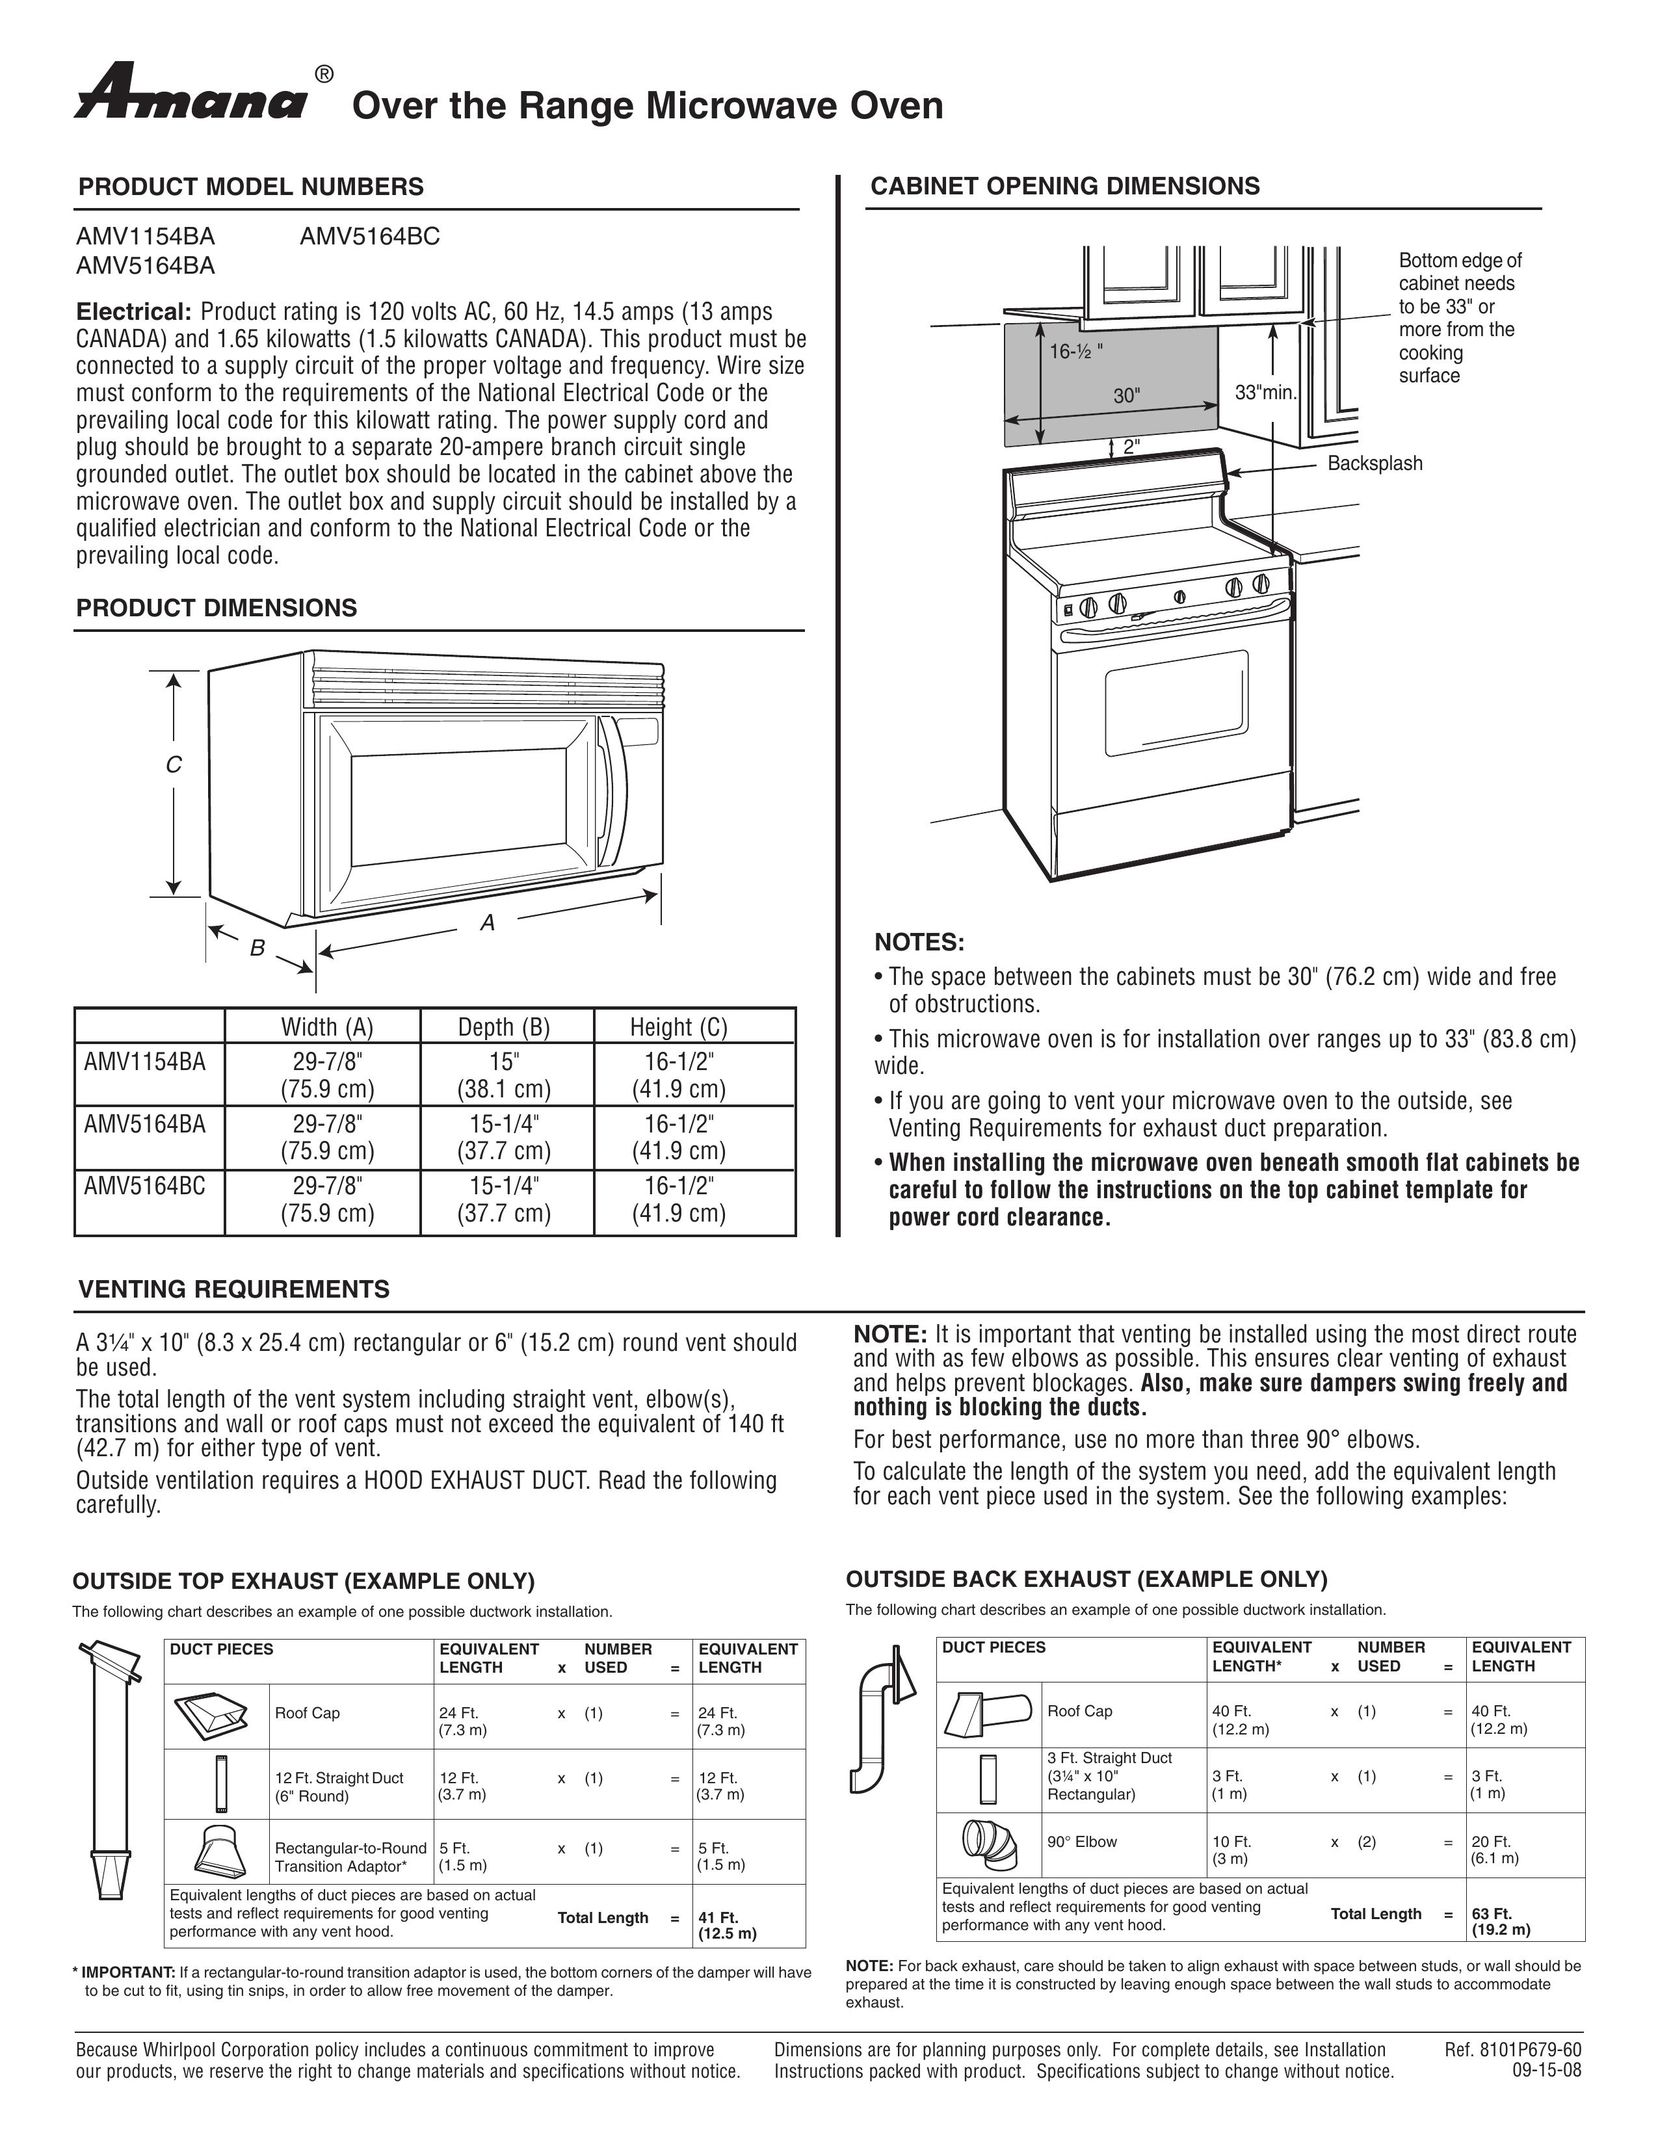 Amana AMV1154BA Microwave Oven User Manual